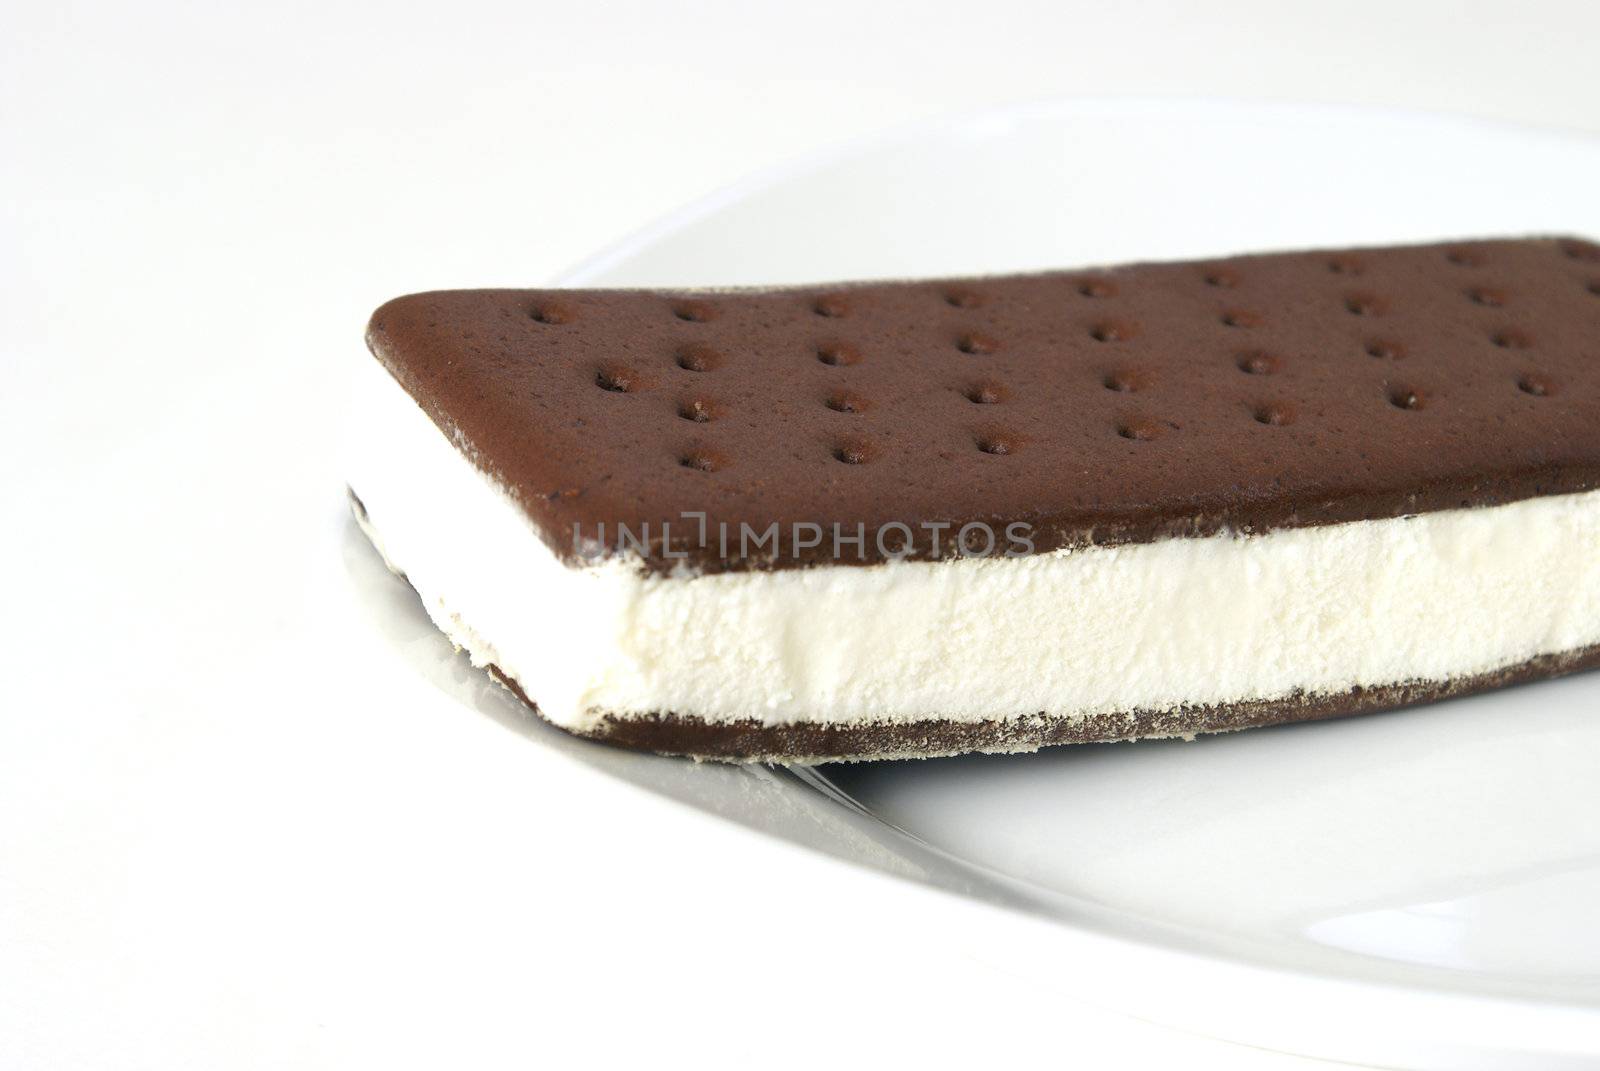 An ice-cream sandwich on a white plate.